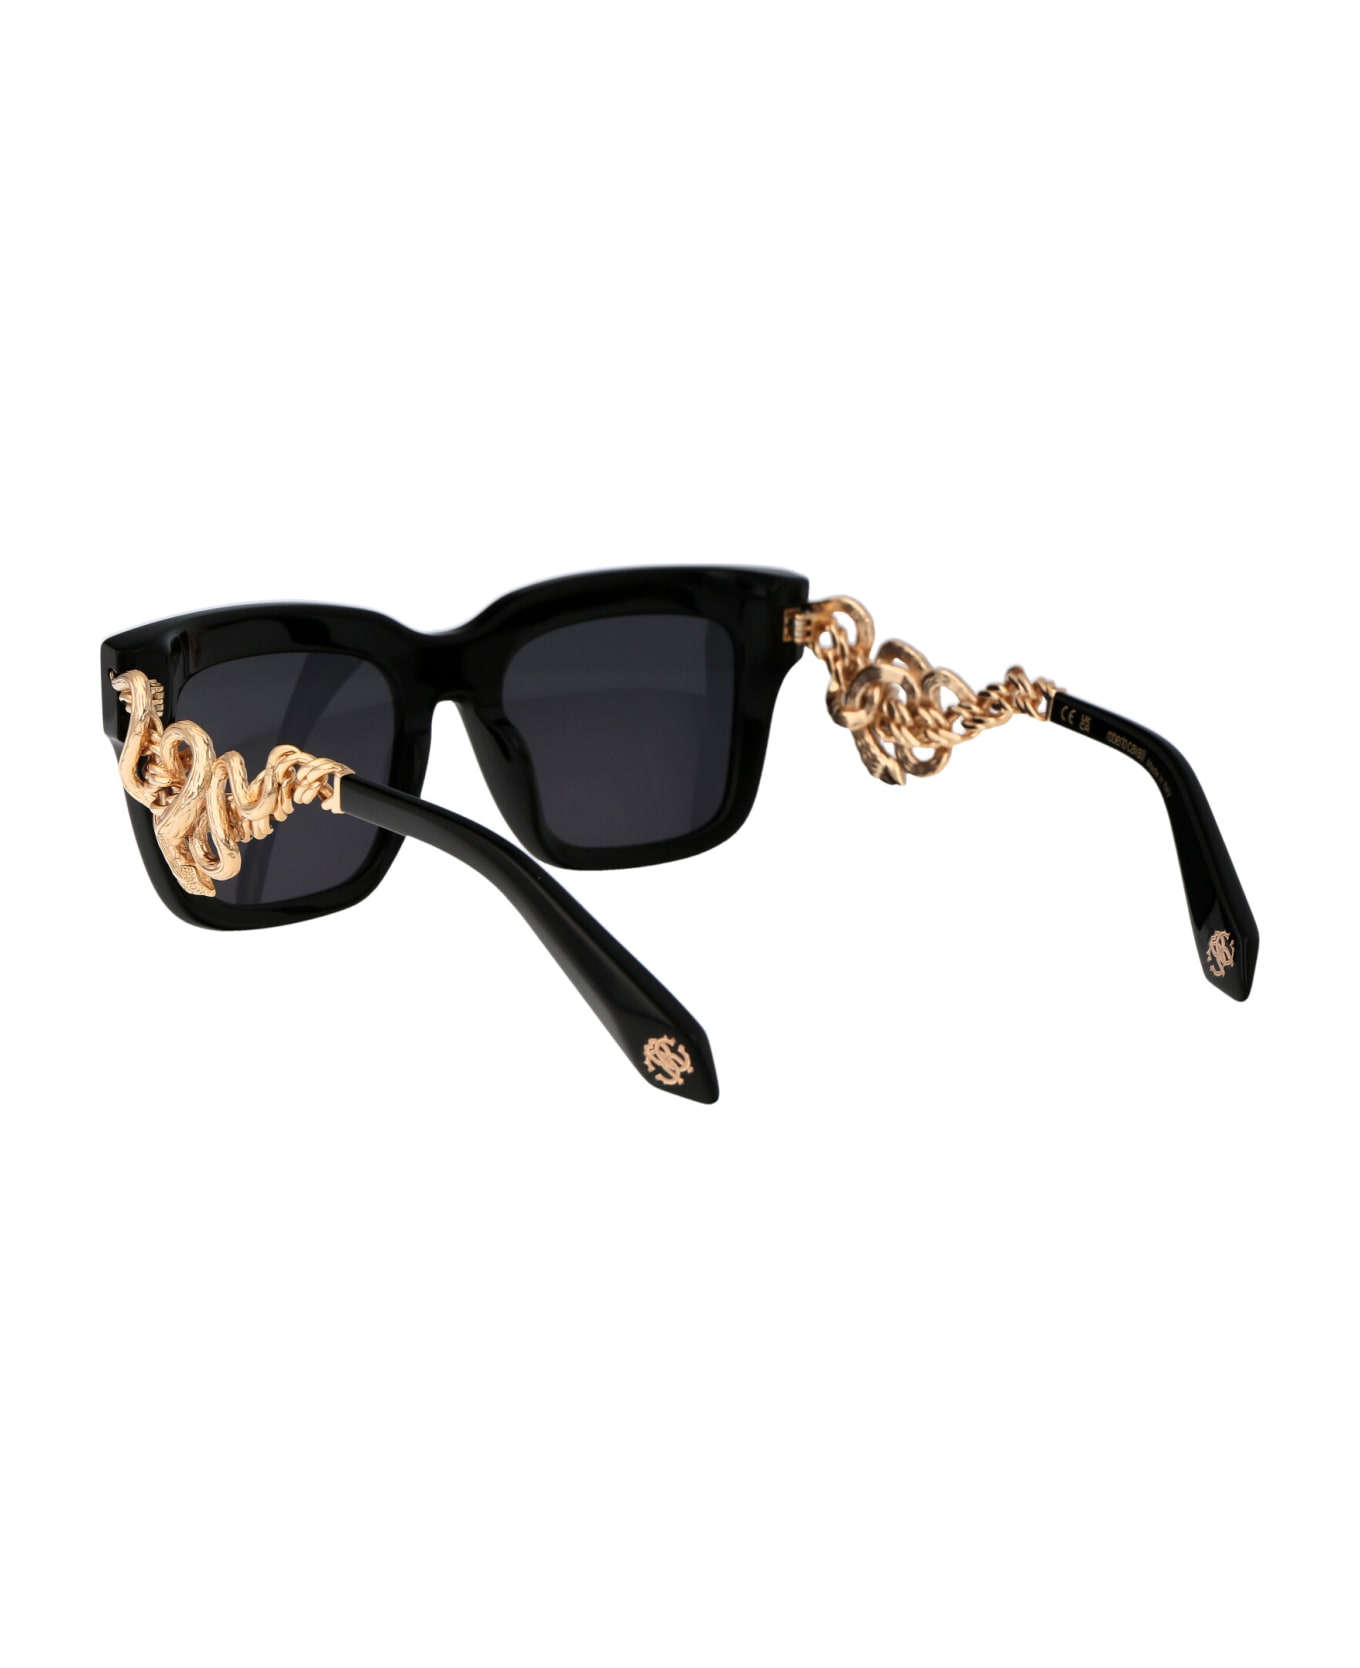 Roberto Cavalli Src041m Sunglasses - 0700 BLACK